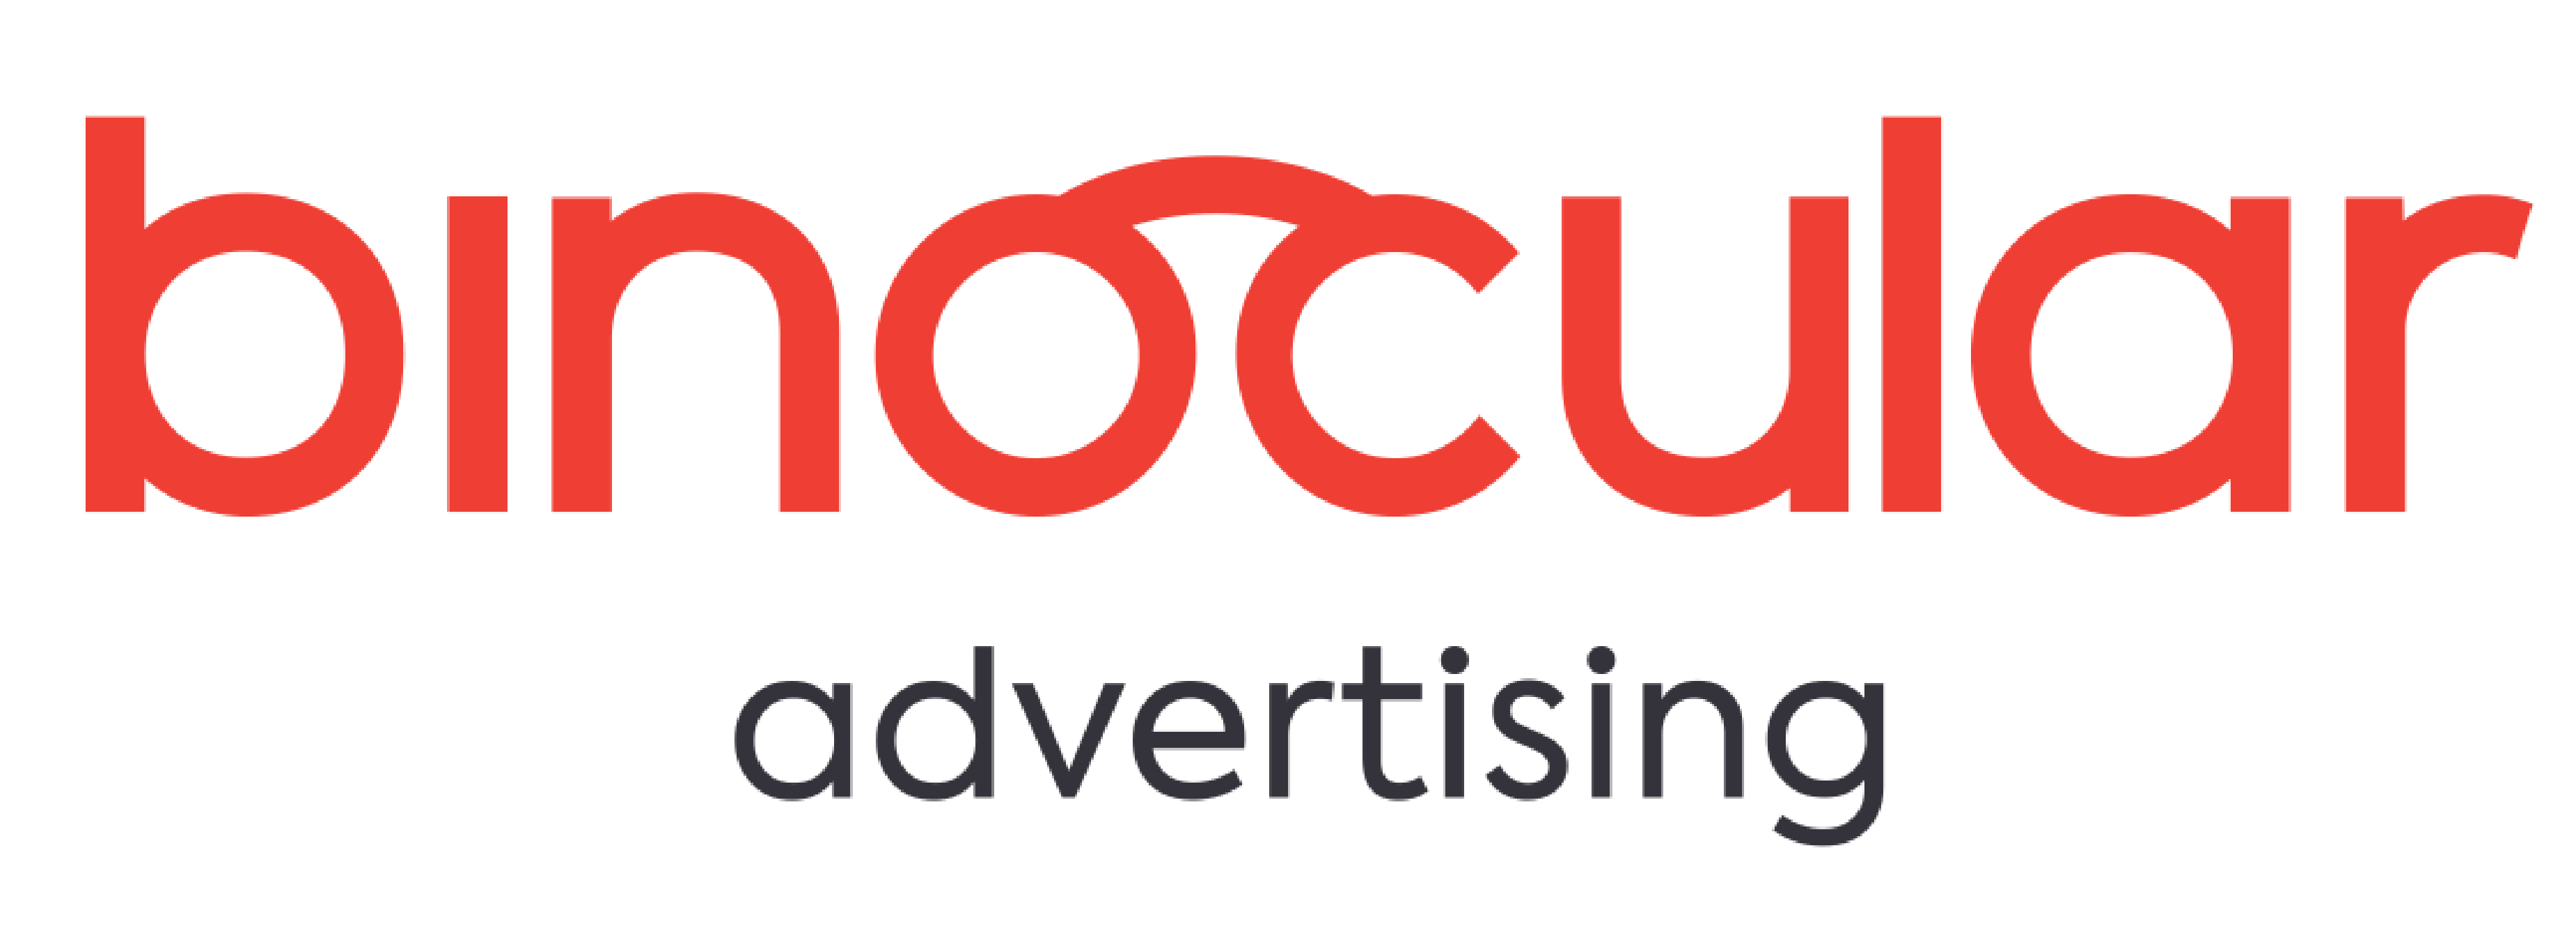  Best Digital Marketing|Branding|Advertising Company in Kannur